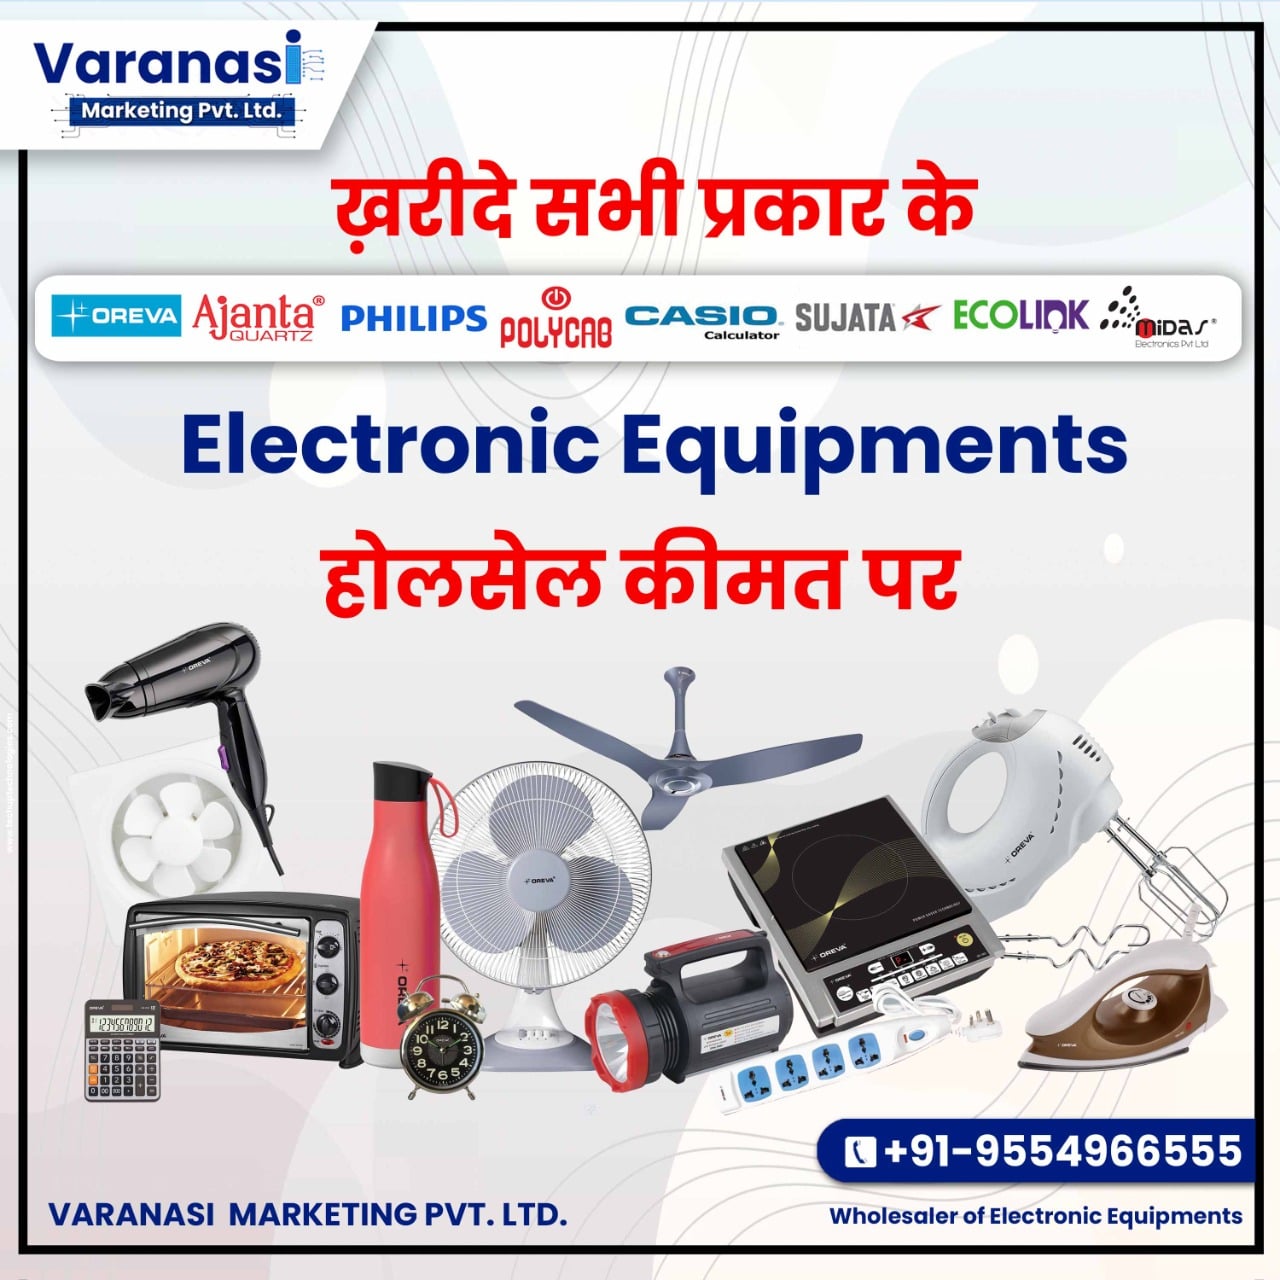 Varanasi Marketing Pvt. Ltd